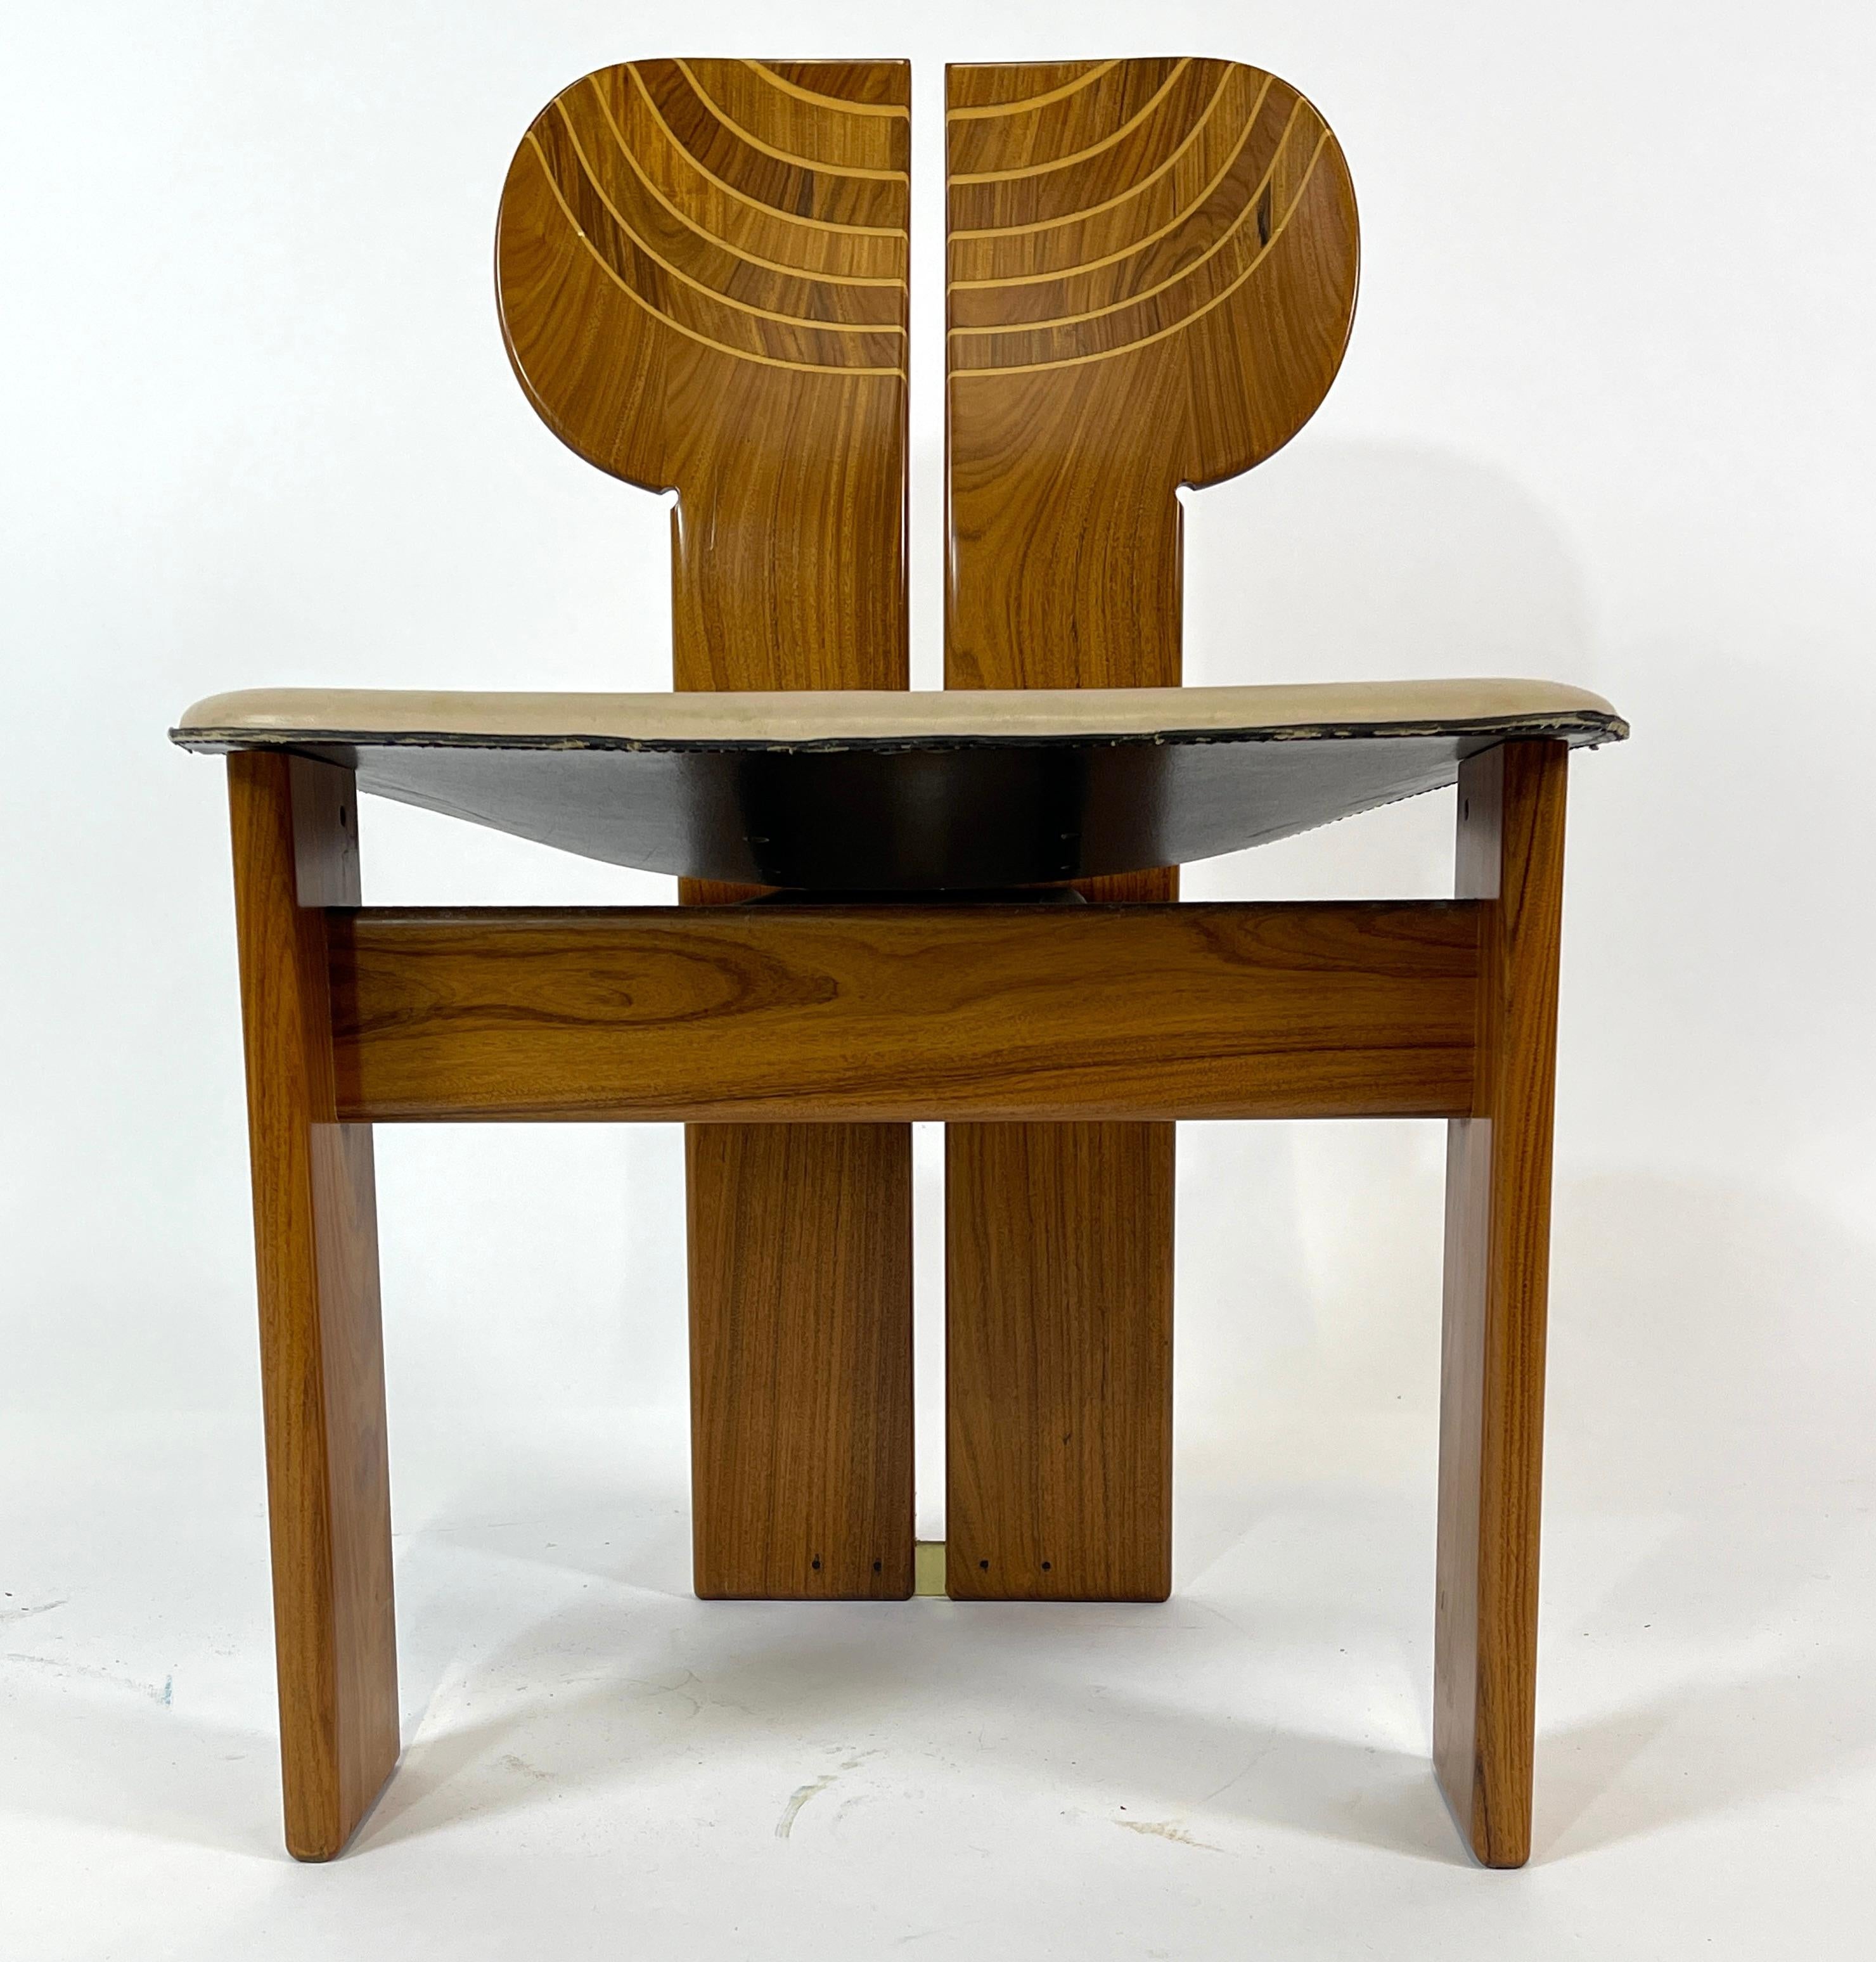 Carved Afra & Tobia Scarpa Artona Series 'Africa' Chairs Produced, Maxalto 4 Available